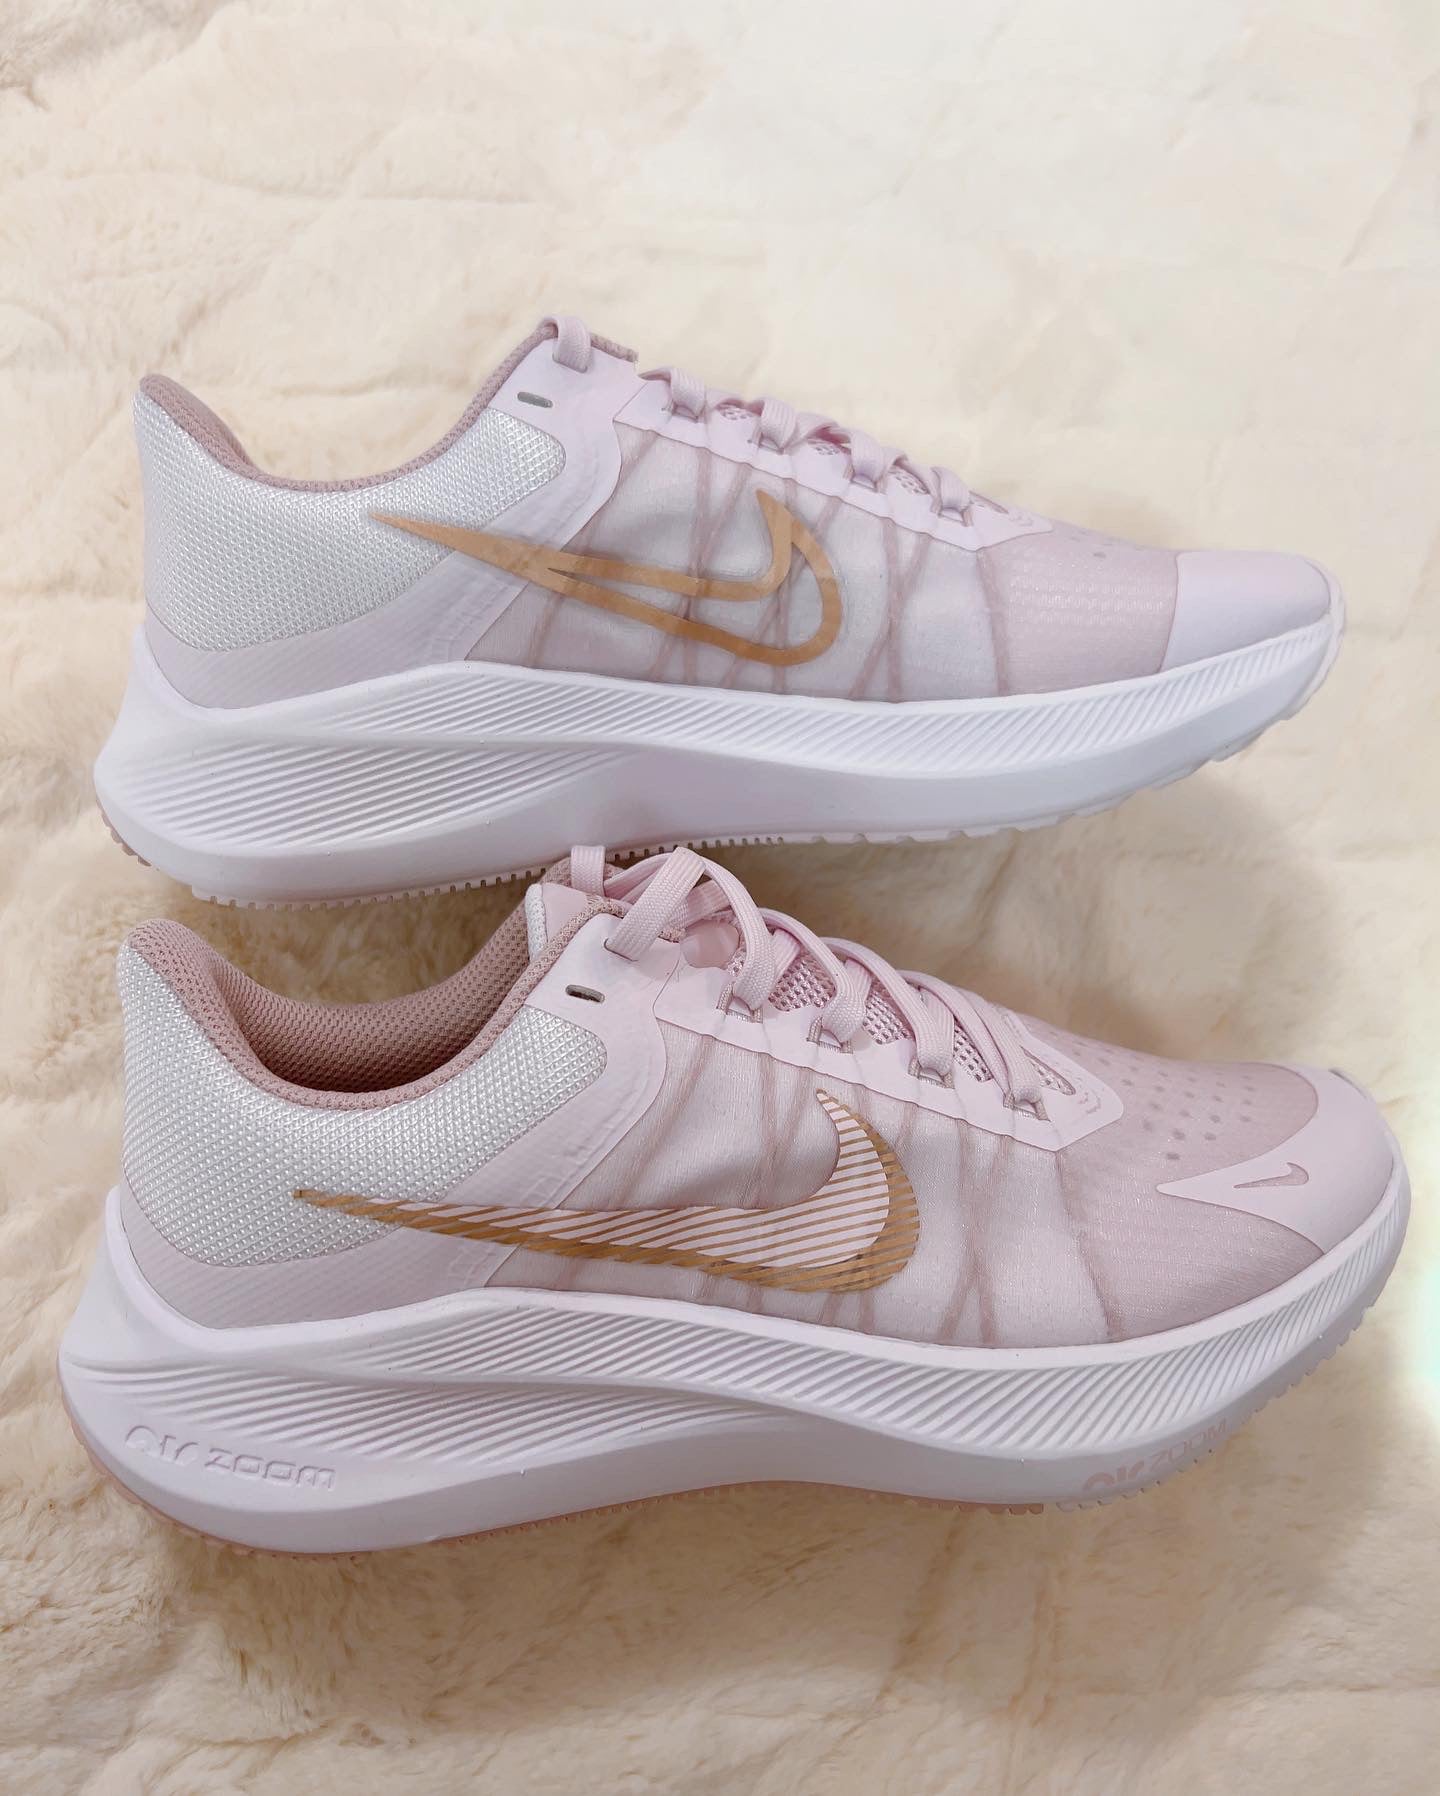 Nike Womens Air Zoom Winflo 8 Running Shoe Sneakers, Blush, Size 7.5